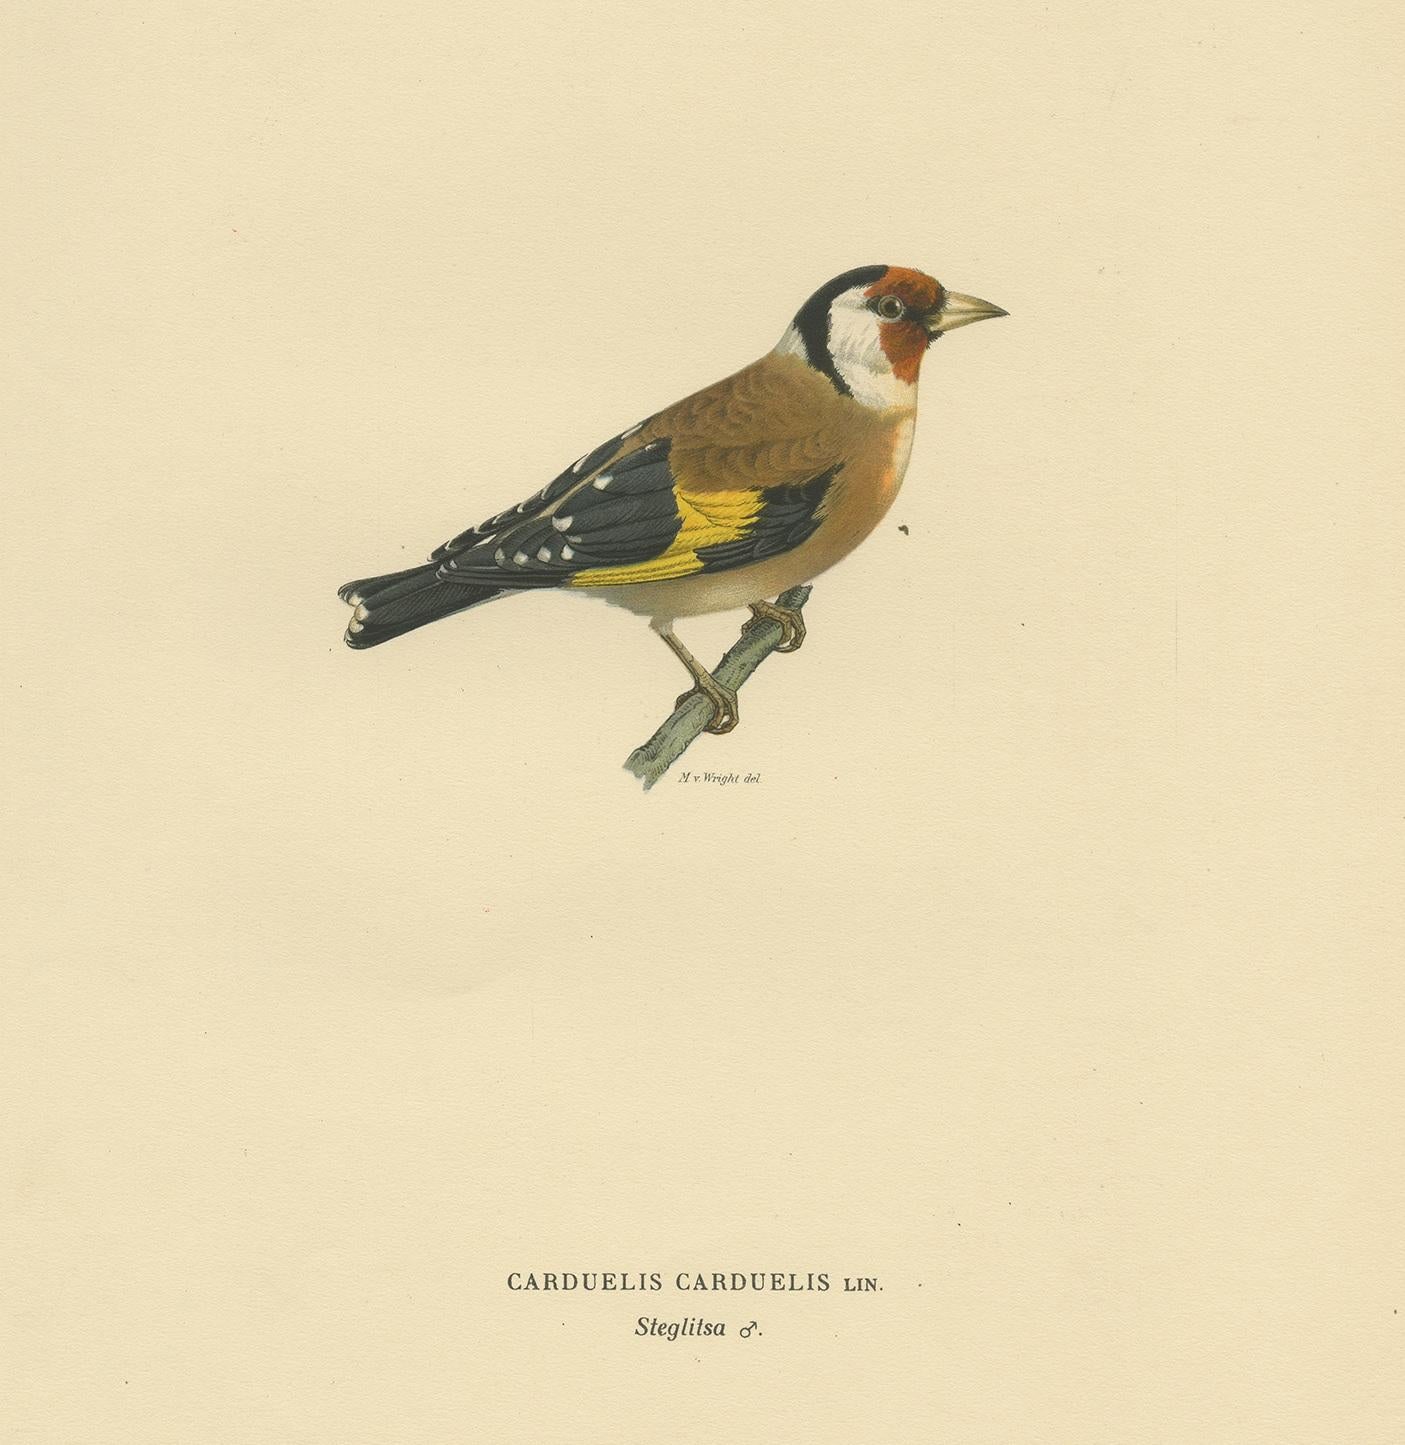 Antique bird print titled 'Carduelis Carduelis'. Old bird print depicting the European goldfinch or goldfinch. This print orginates from 'Svenska Foglar Efter Naturen Och Pa Stenritade' by Magnus von Wright.